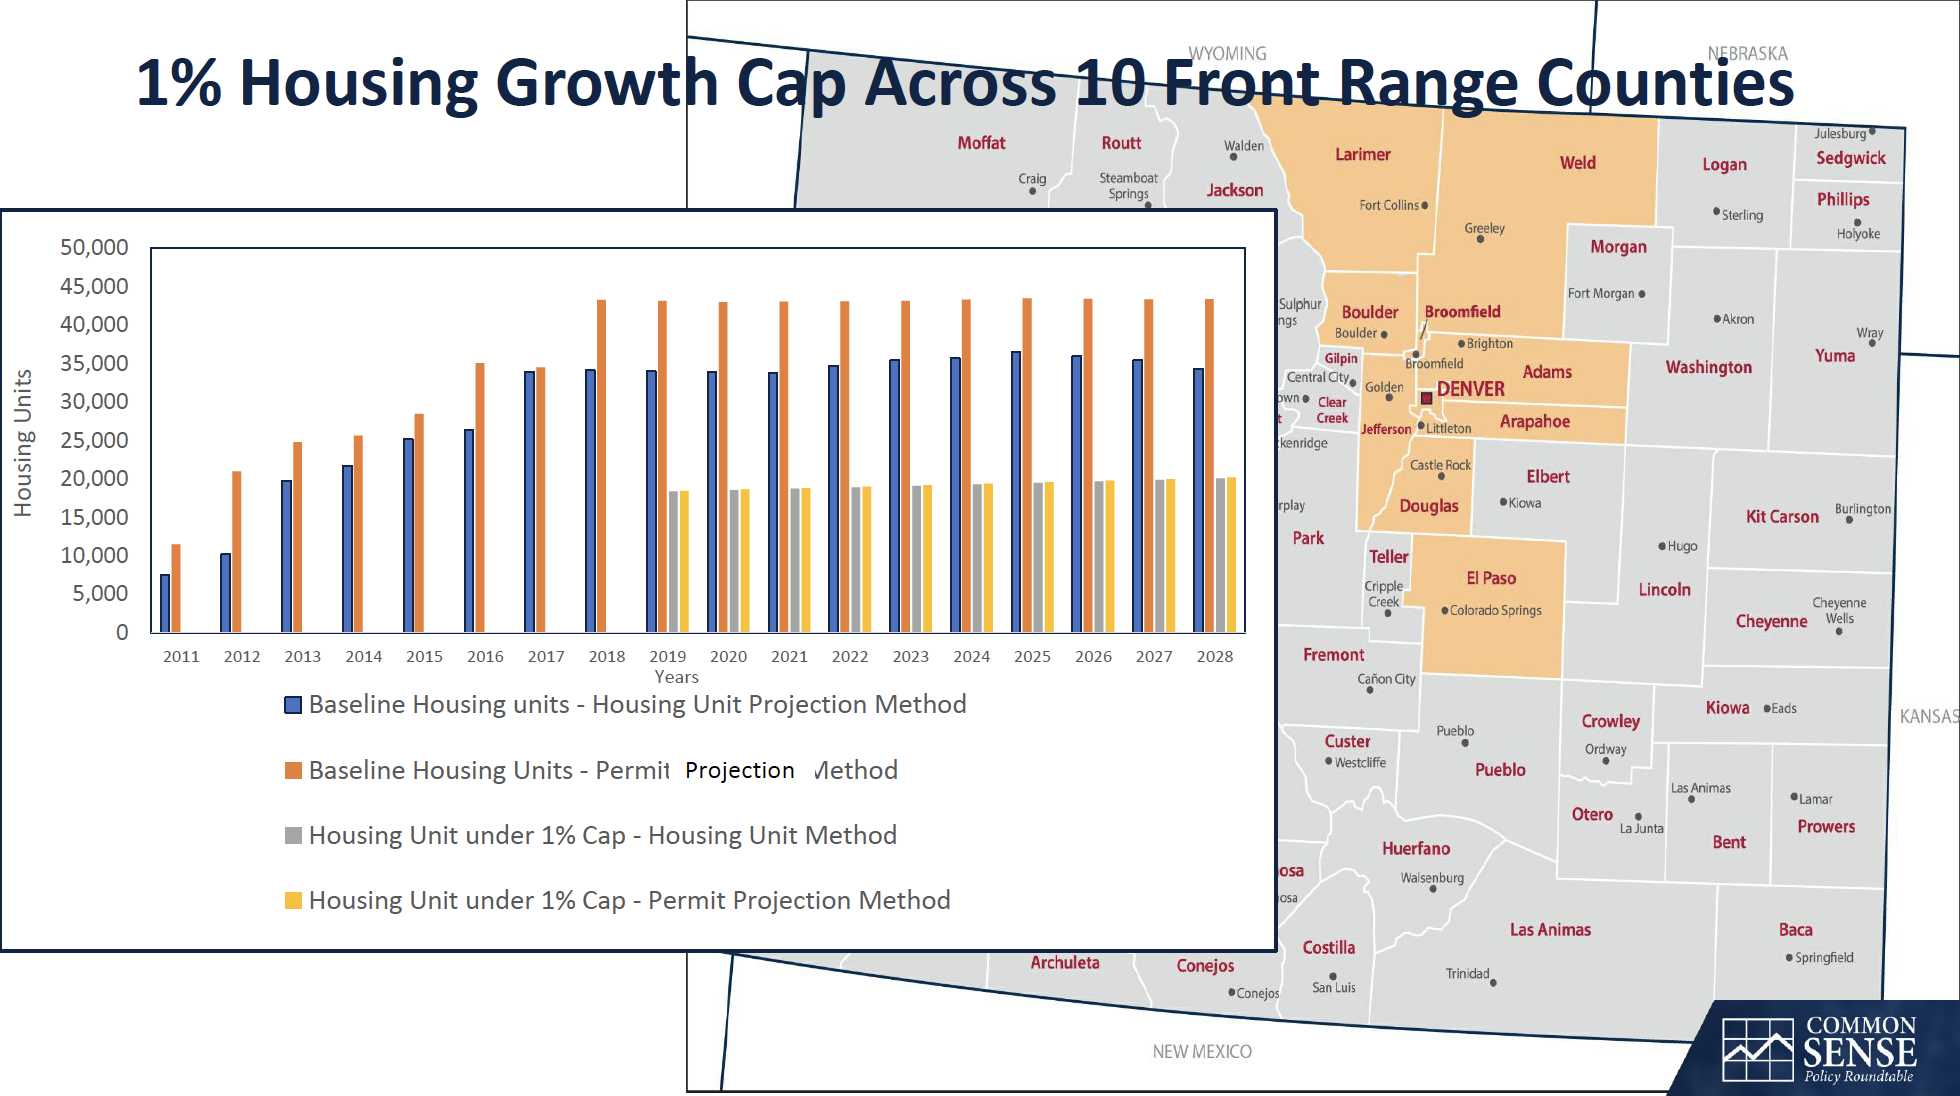 1% Housing Growth Cap across 10 Front Range Counties